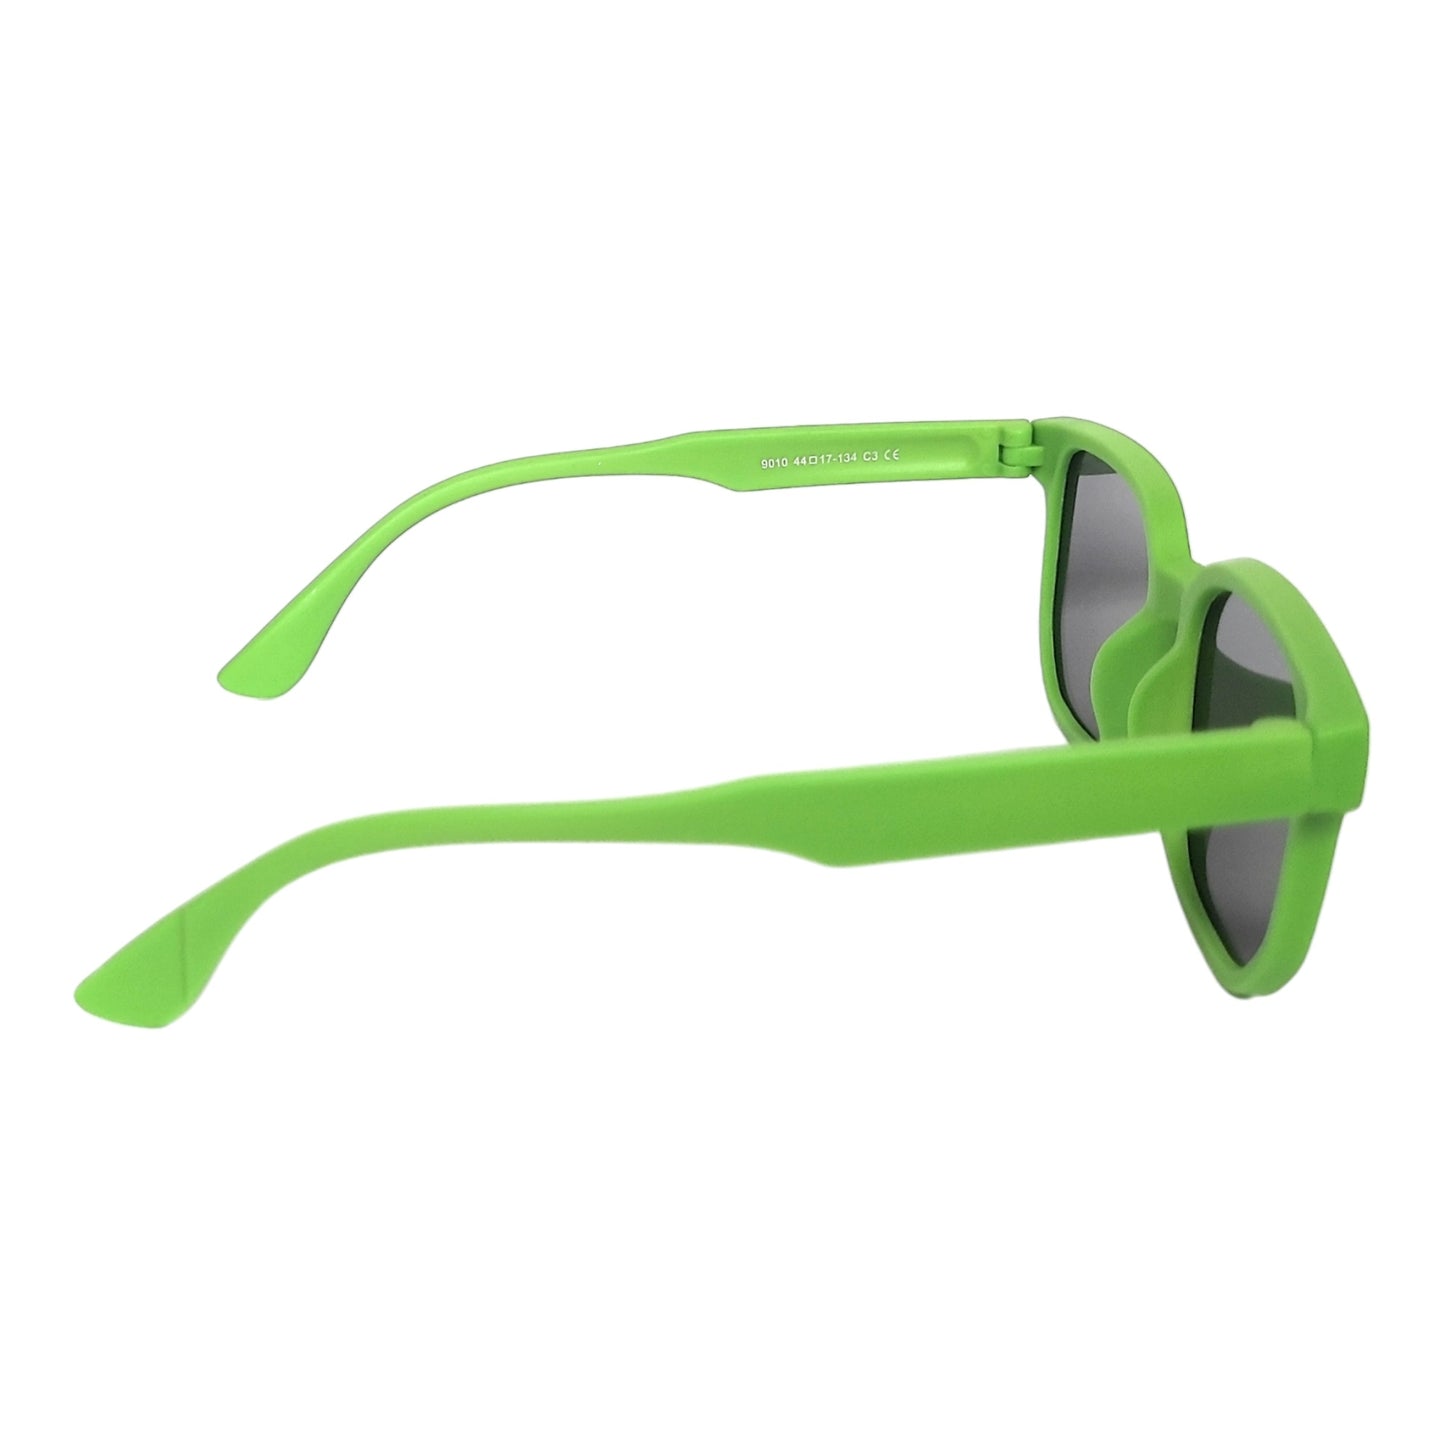 Wayfarer Kids Polarized Sunglasses for Children Age 4-9 Years Old, Girl or Boy  | affaires-9010 - Green